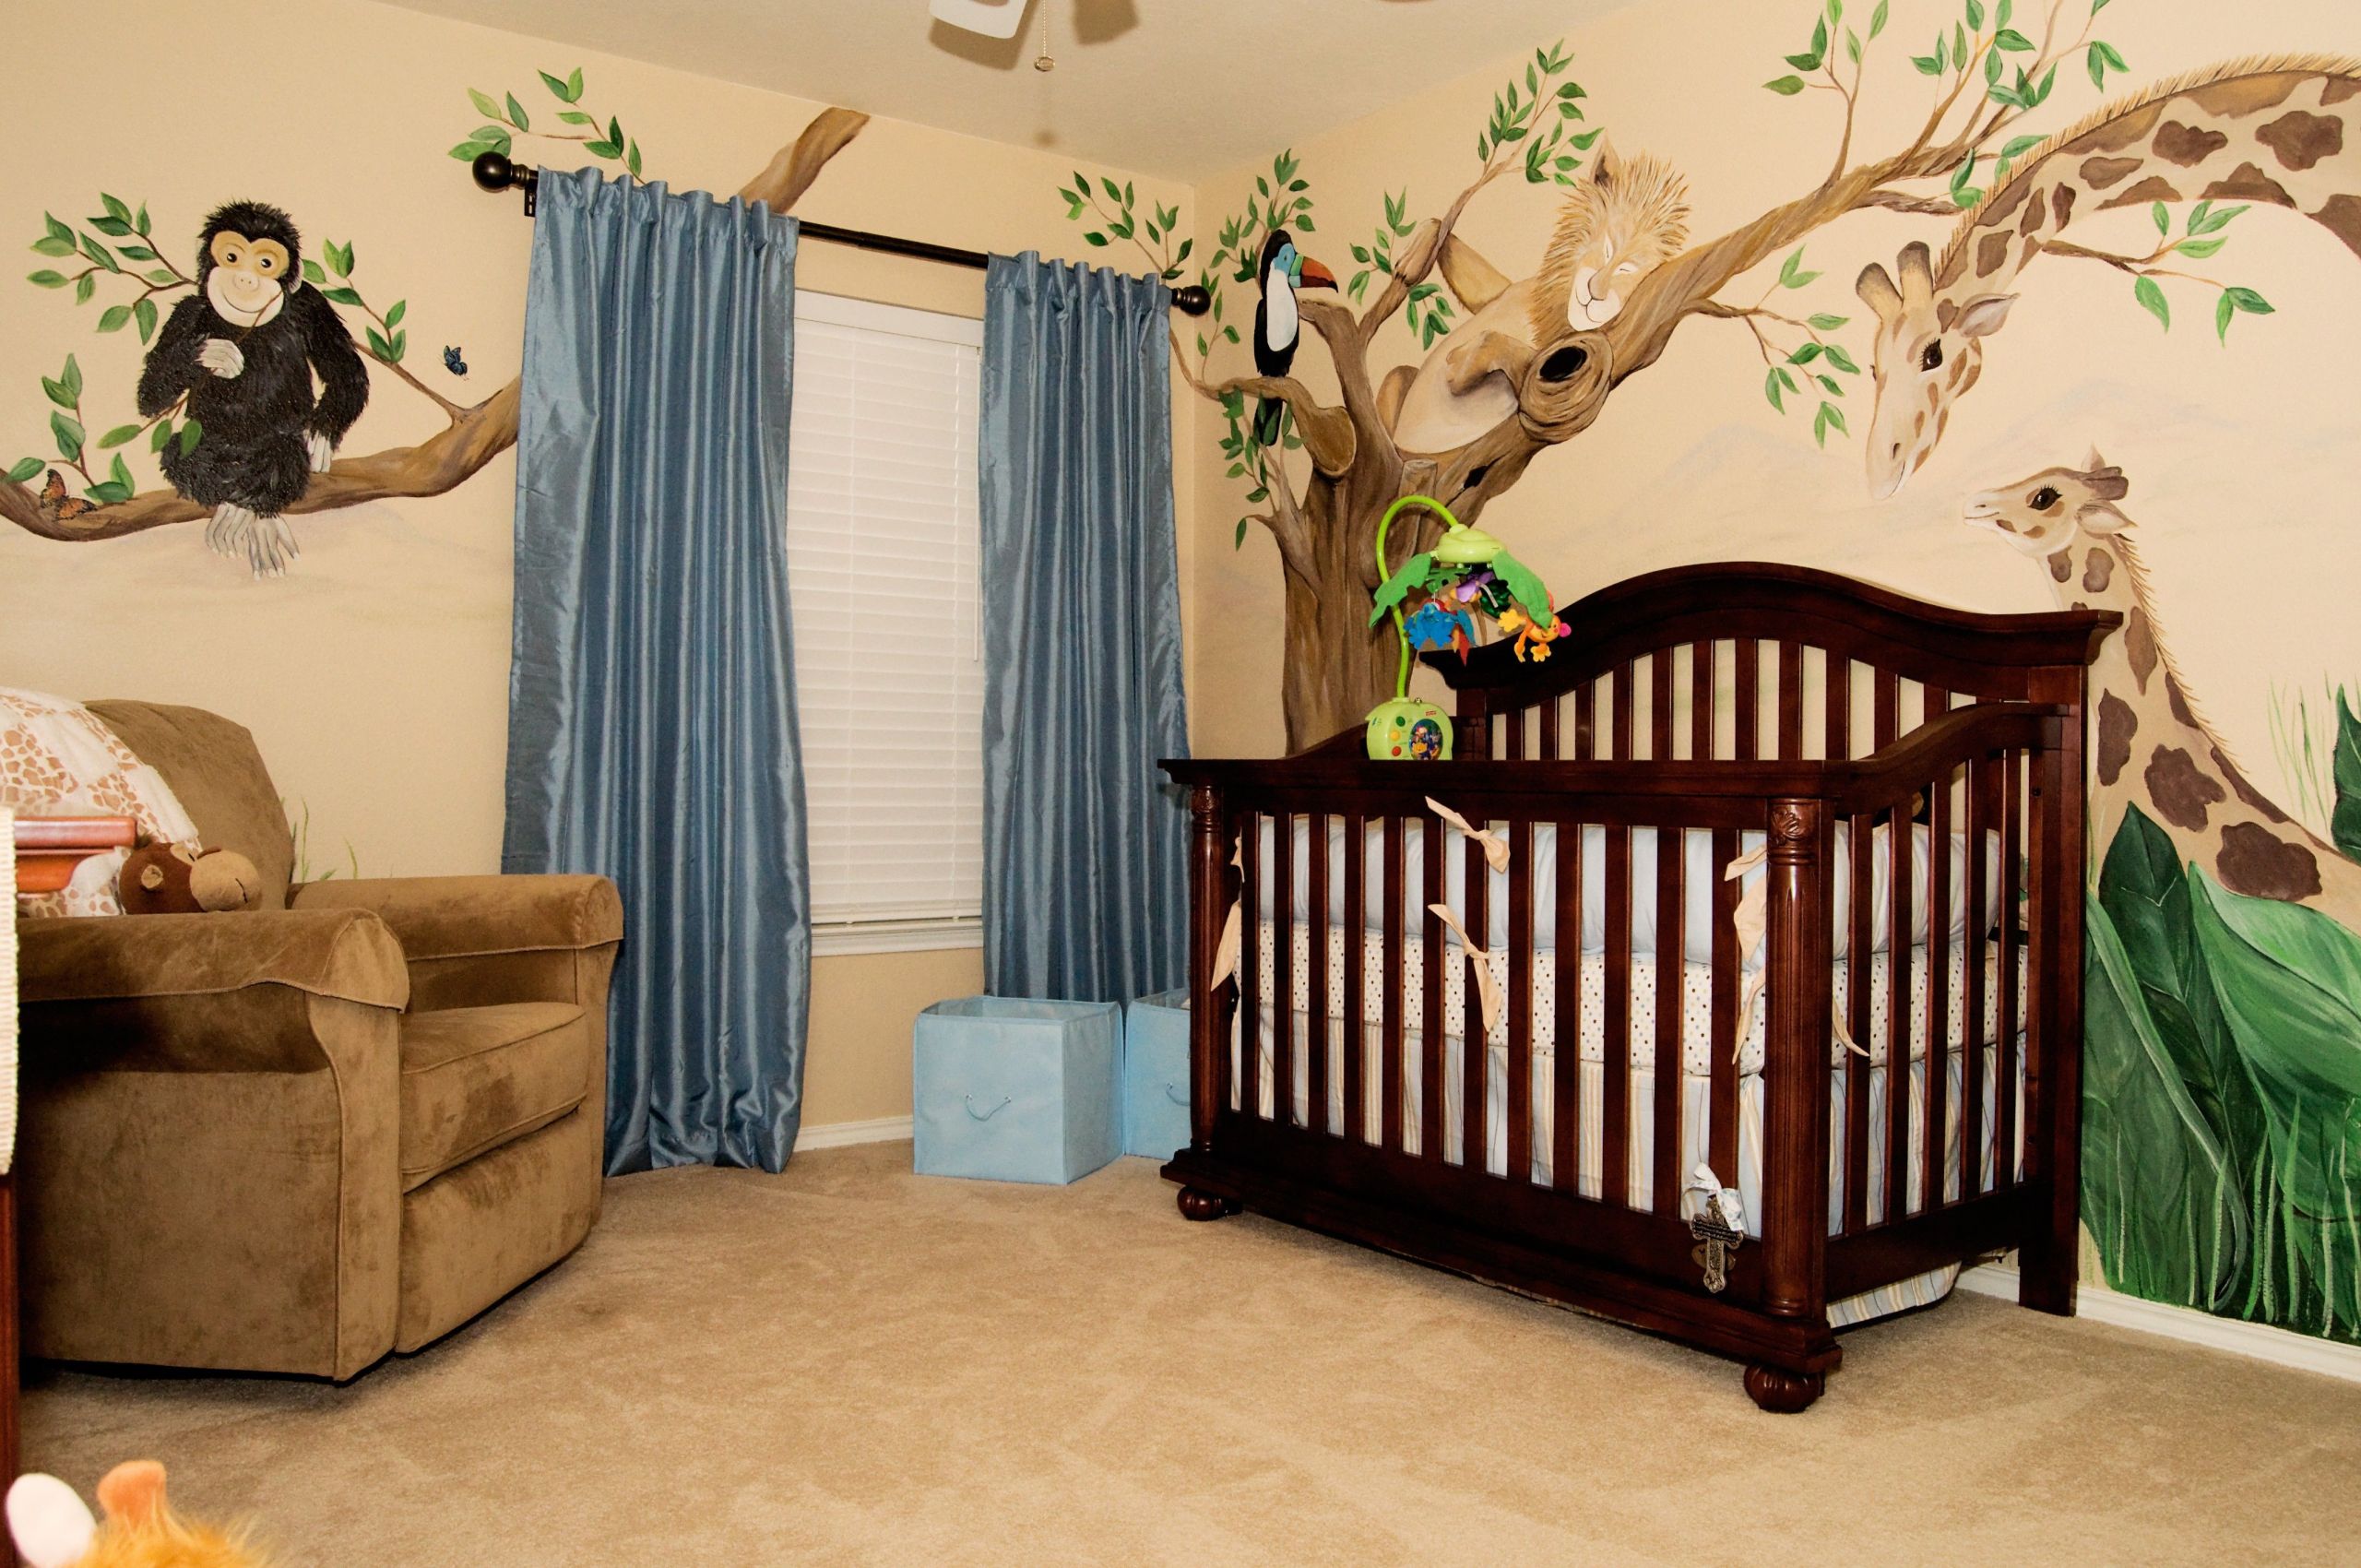 Jungle Baby Room Decor
 boy baby nursery closet ideas boy decorating room decor